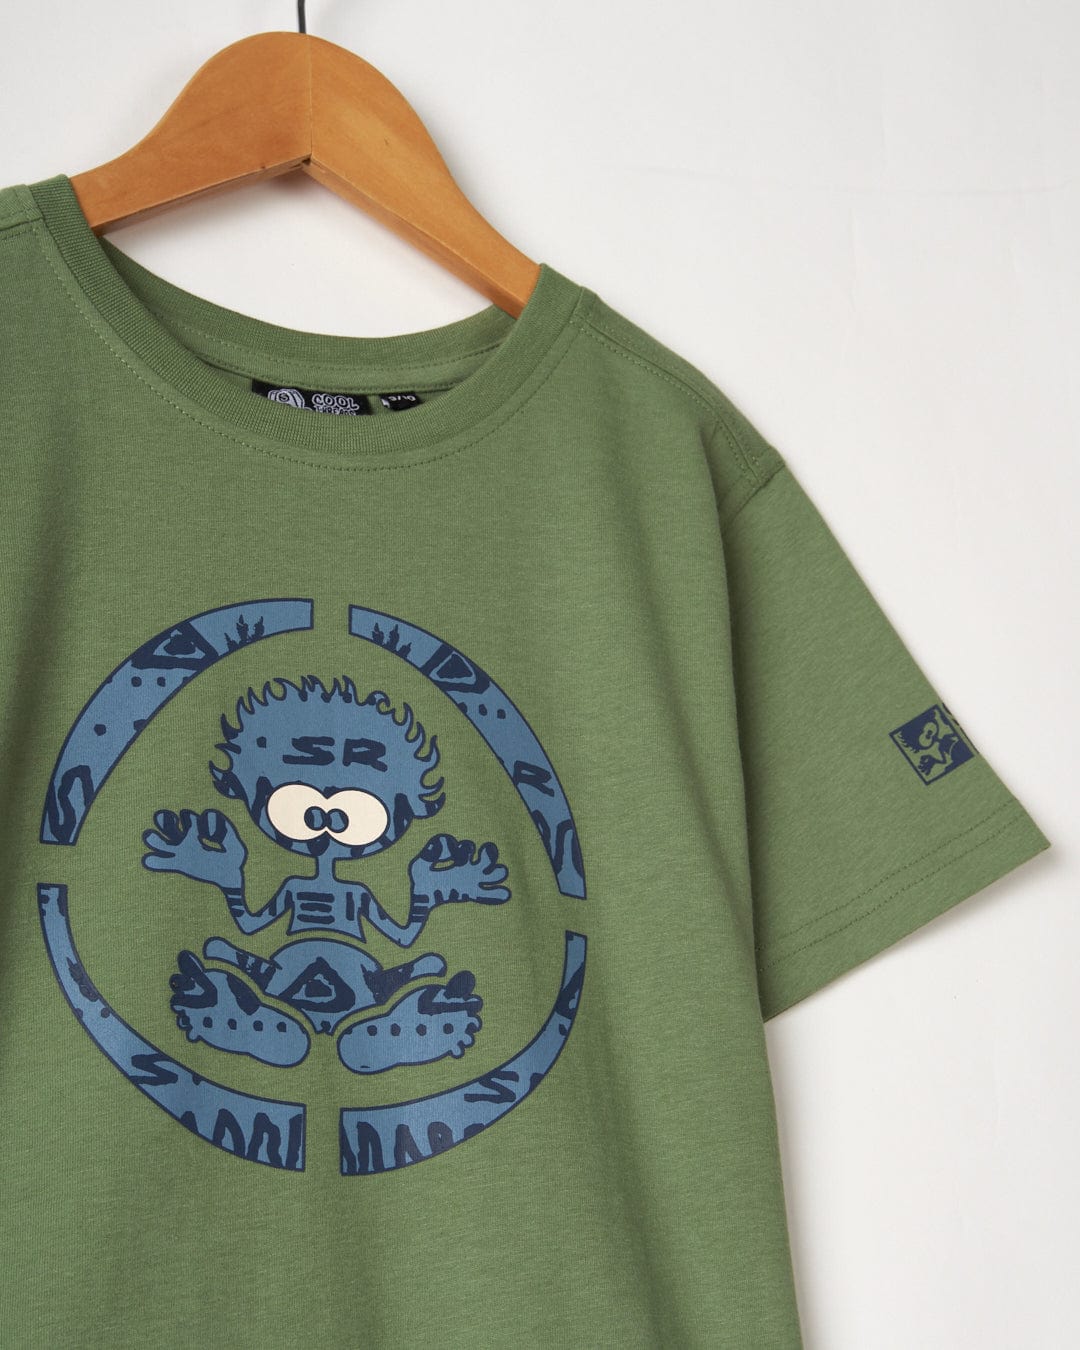 A green Saltrock Kids Short Sleeve T-Shirt with a blue bear illustration on it.